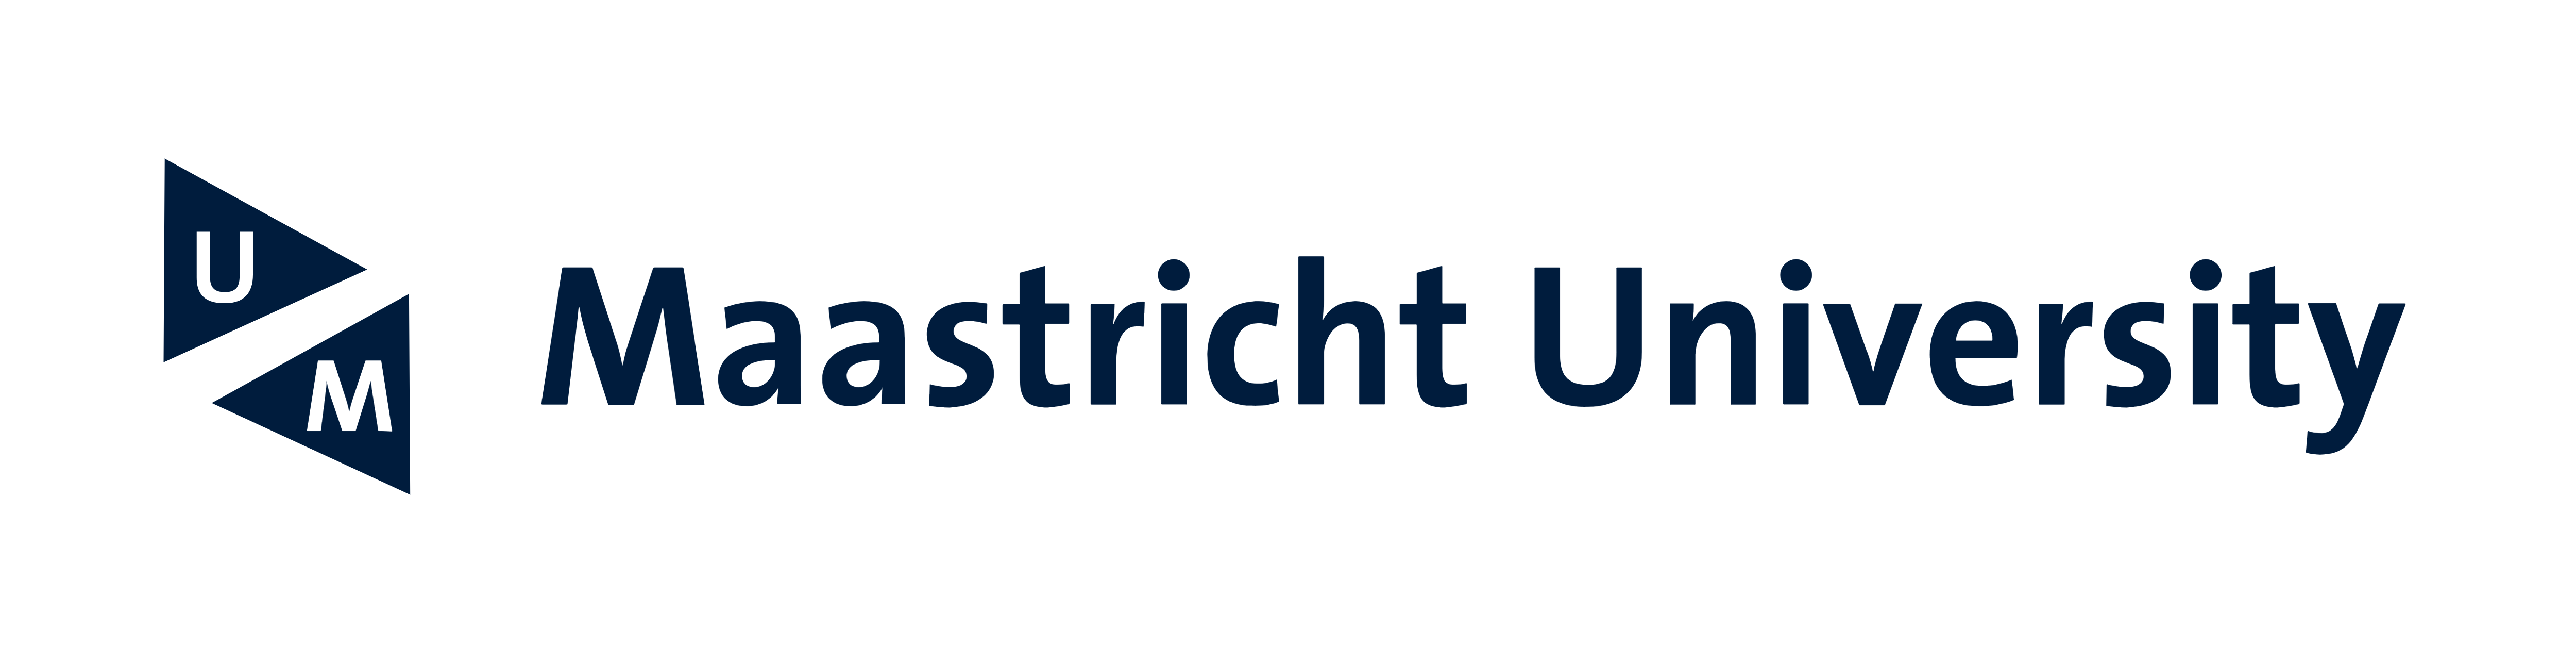 Maastricht University Logos Download